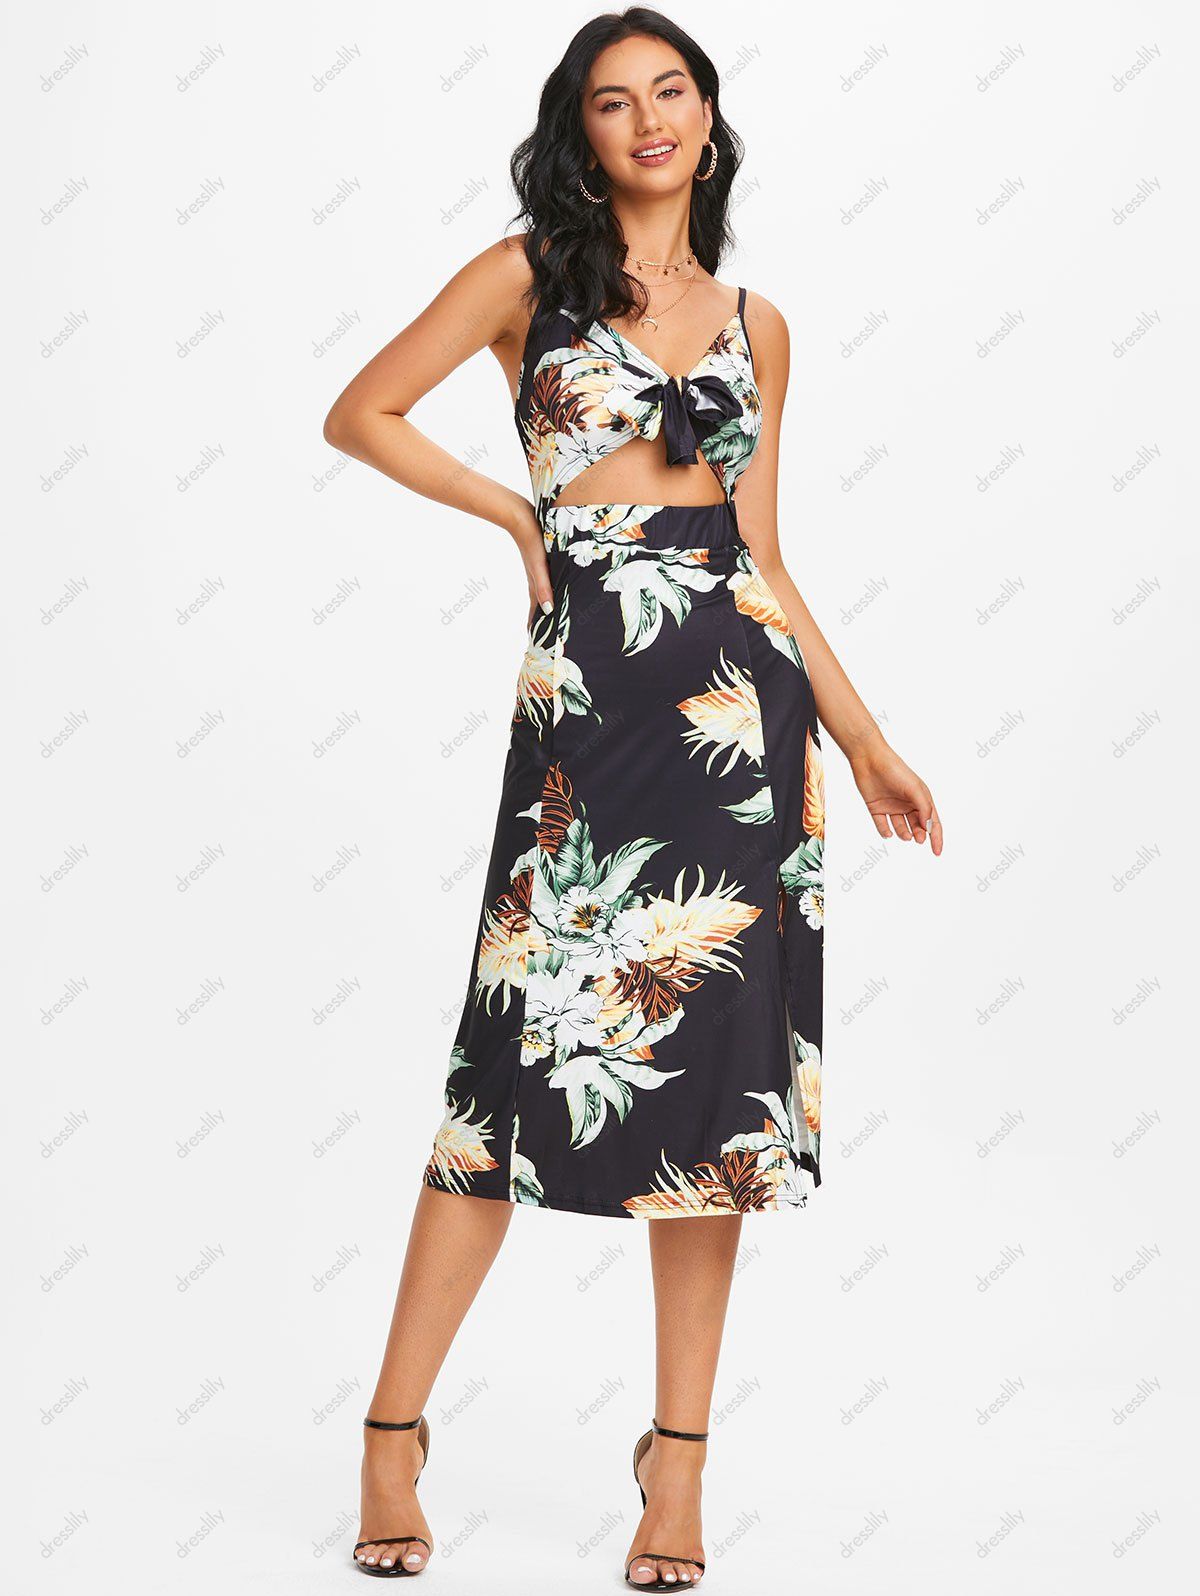 Flower Print Vacation Midi Dress Knotted Cutout Side Slit Cami Dress Adjustable Straps Backless Dress 